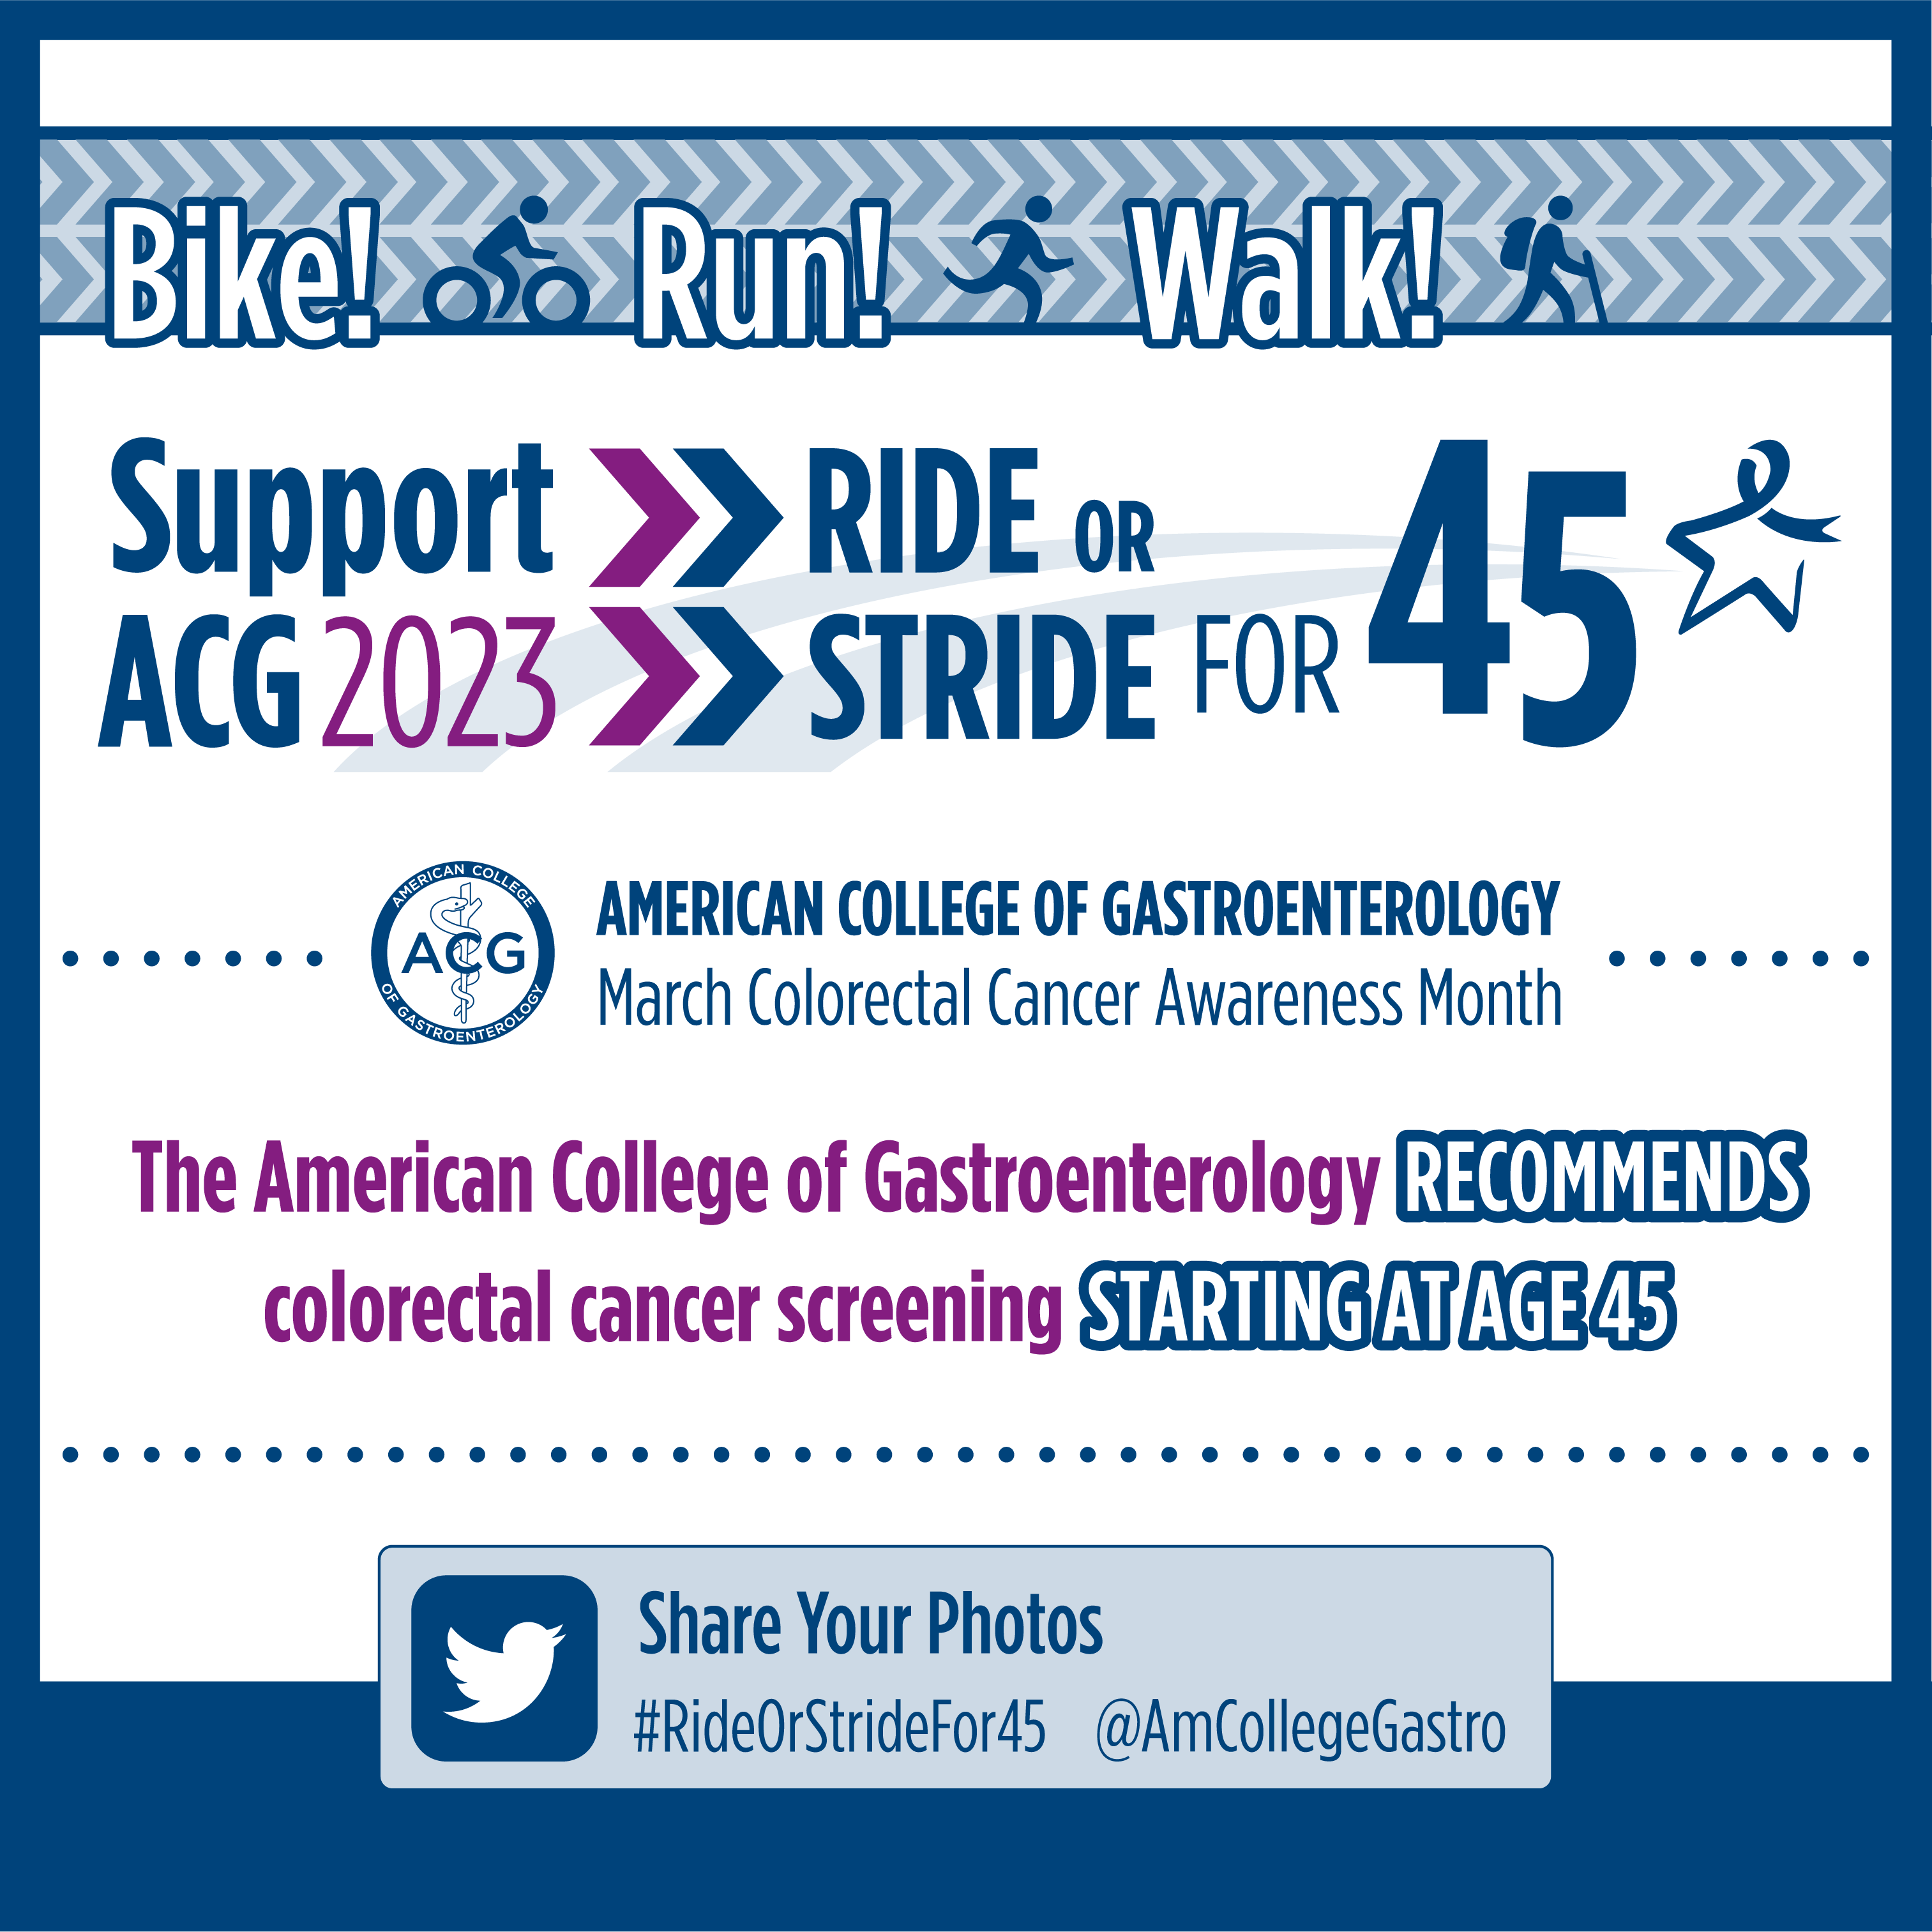 ACG 2023 Bike, Run, Walk, Ride or Stride Graphic